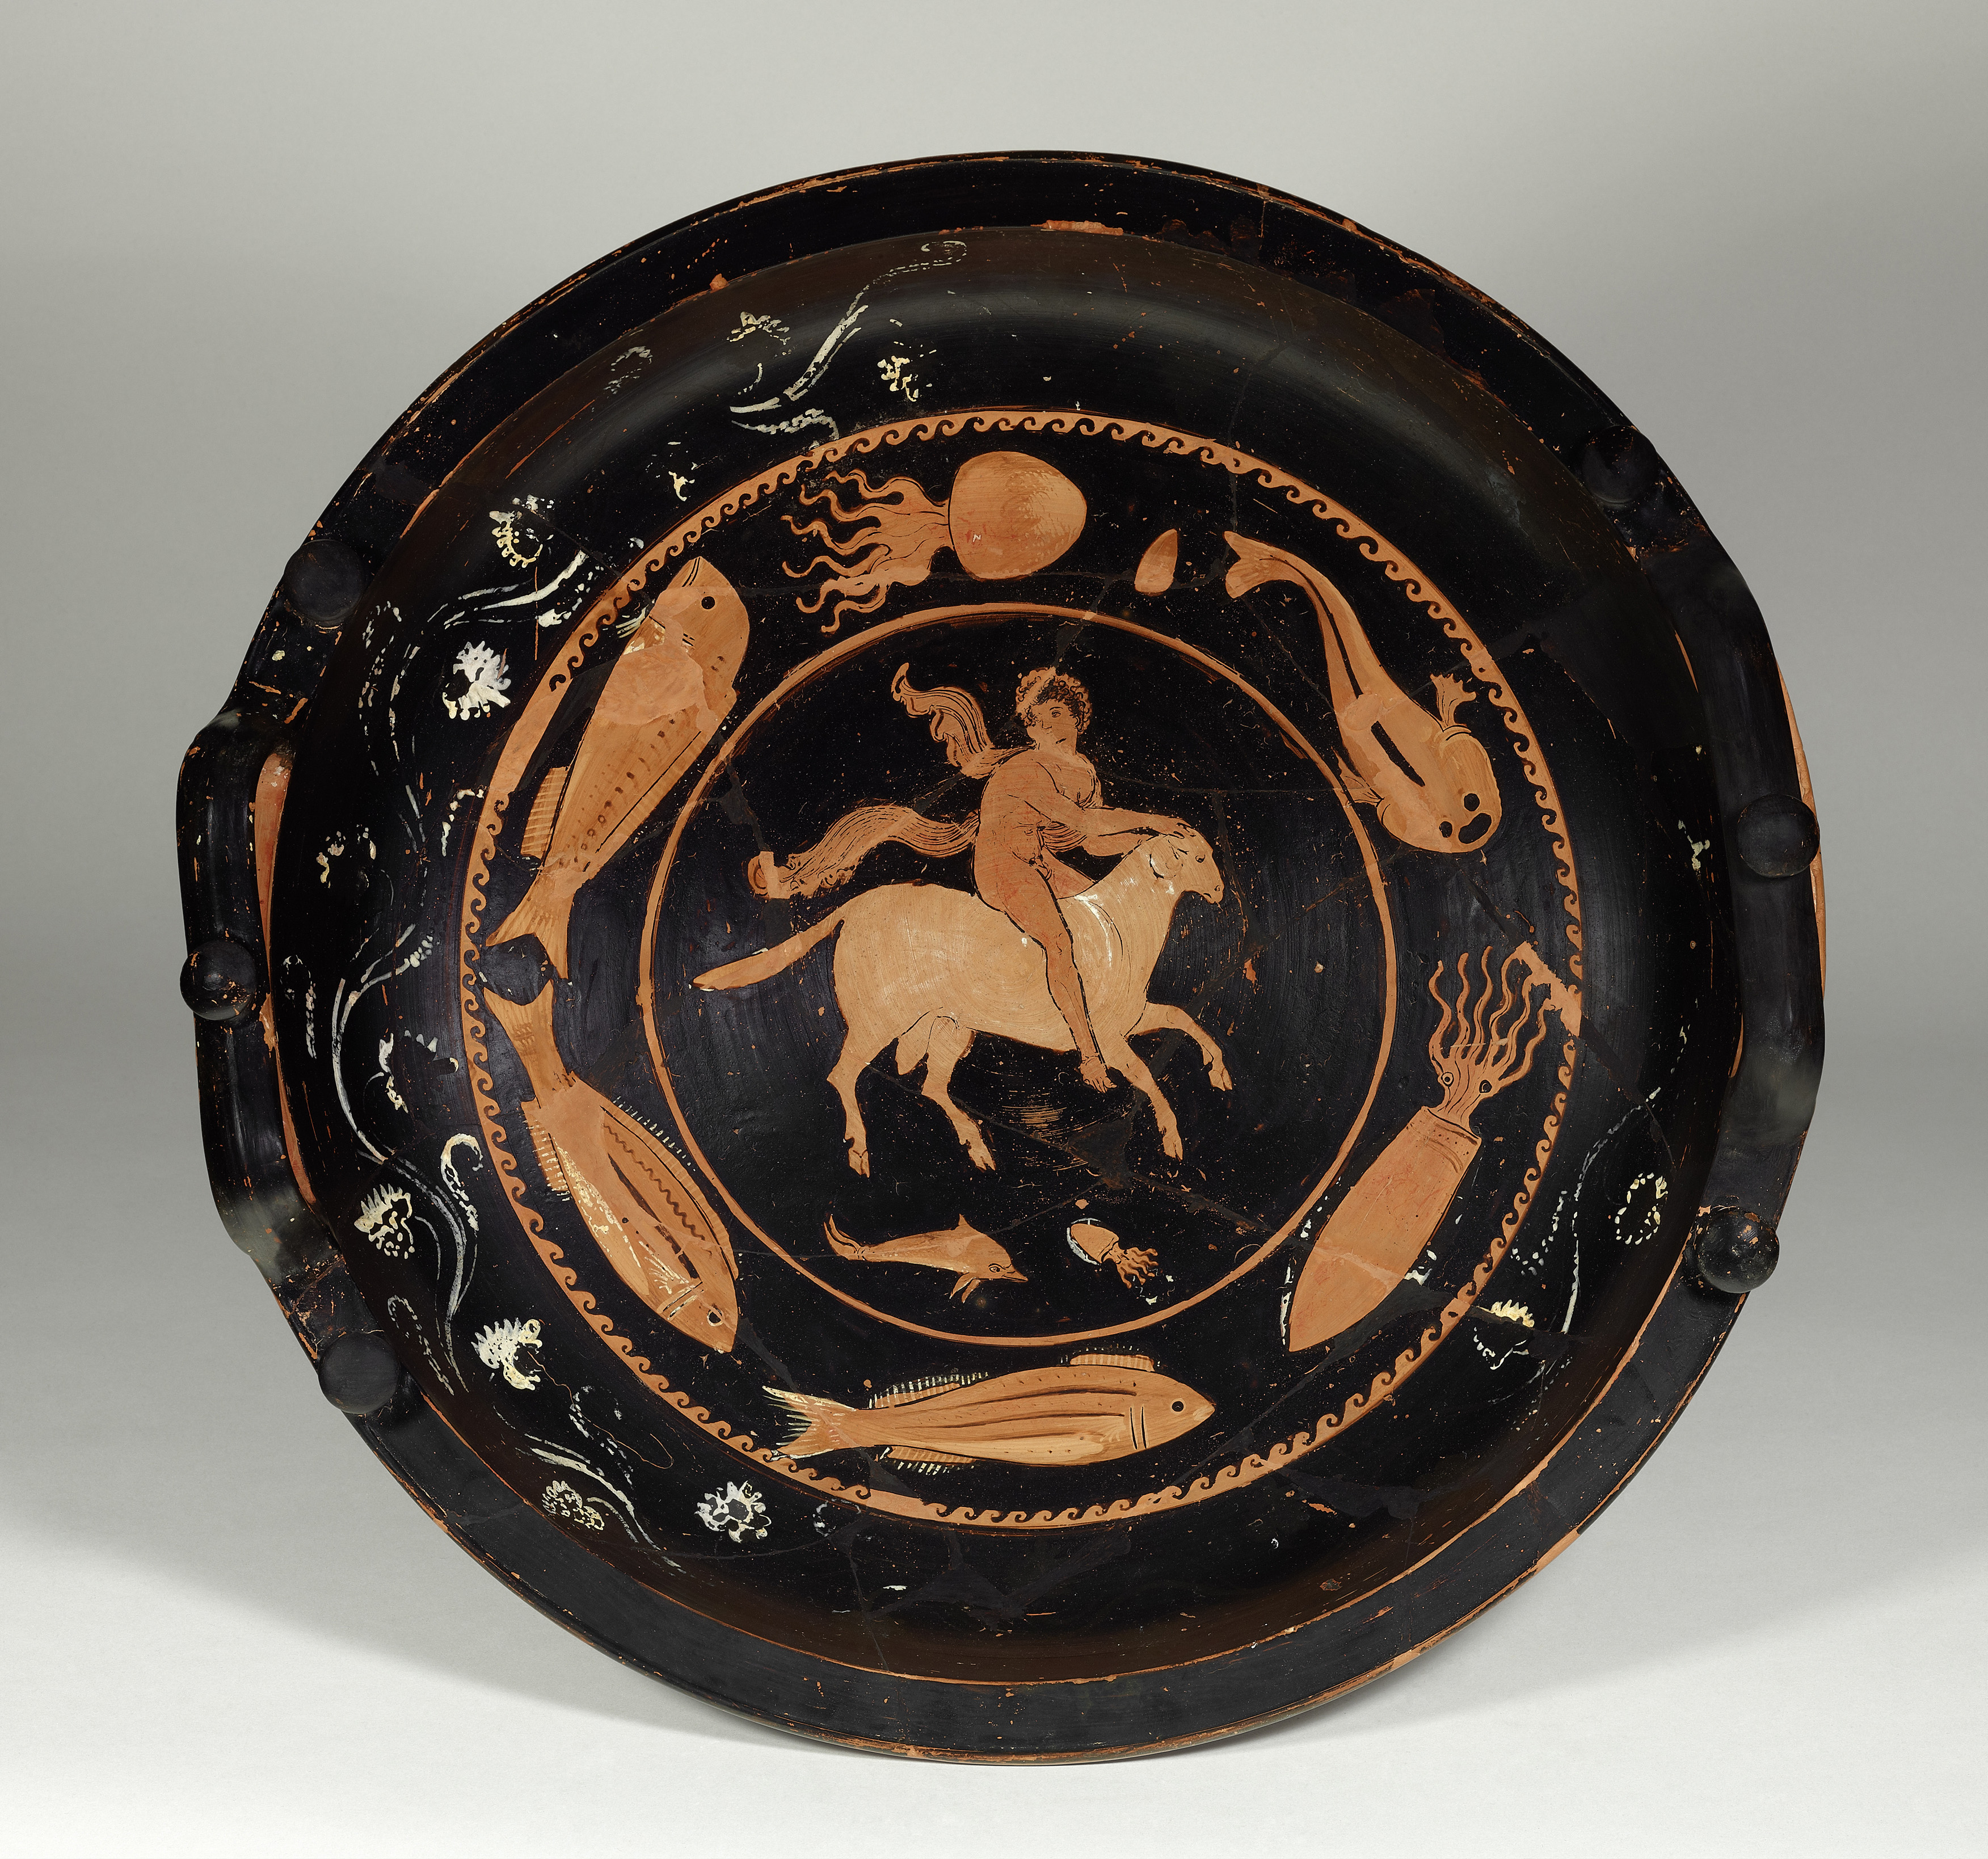 Medea-Mythos: Apulisch-rotfigurige Schüssel